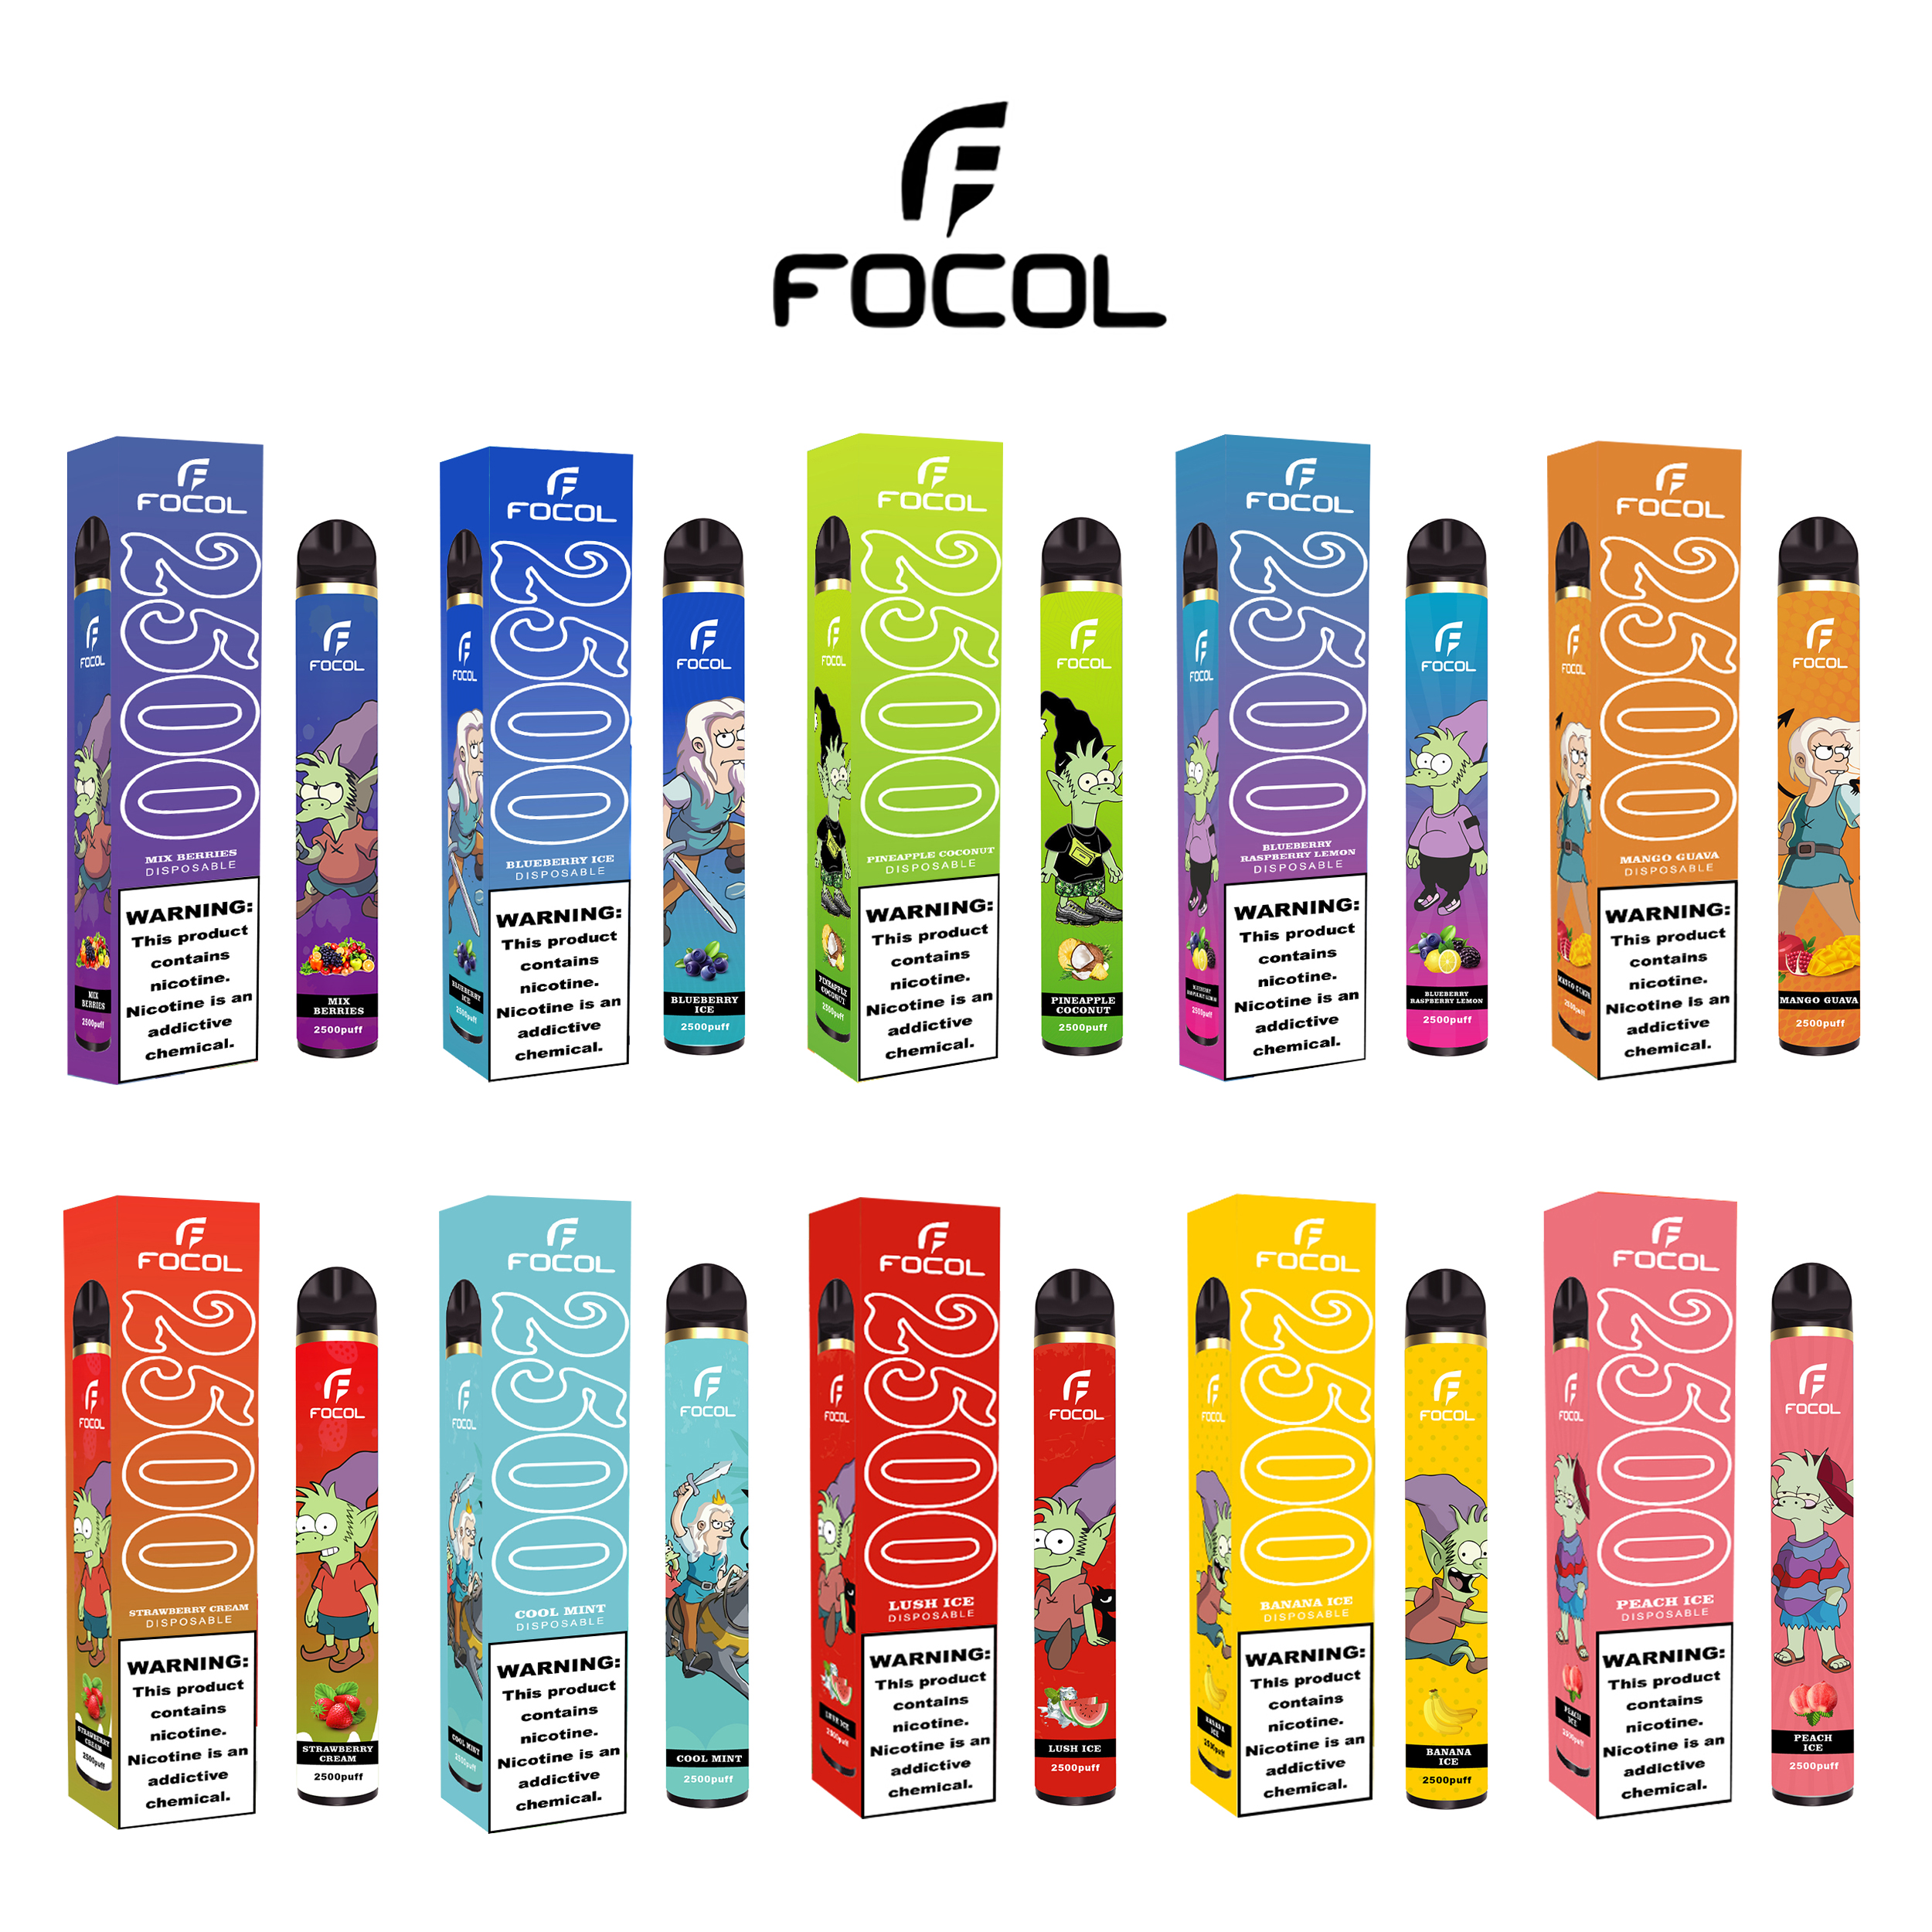 FOCOL STICK Nicotine Disposable Vape 2500 Puffs